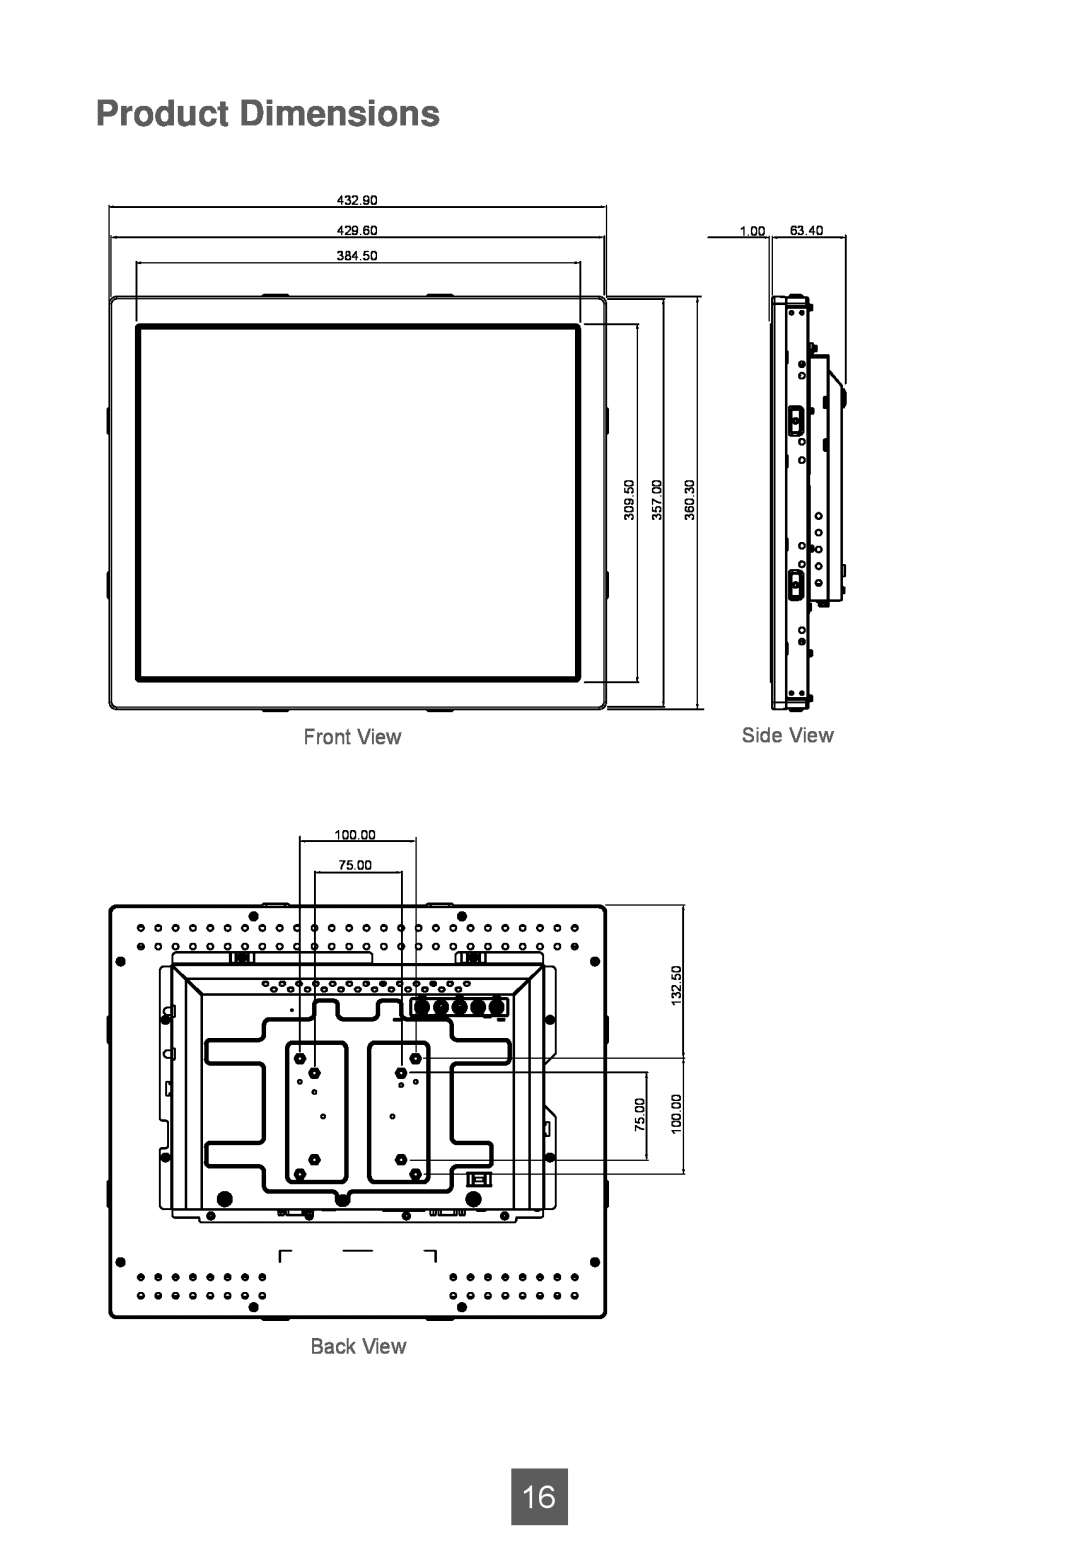 Planar LA1950RTR Product Dimensions, Side View, 432.90 429.60 384.50, 1.00, 309.50, 357.00, 360.30, 75.00, 132.50, 100.00 